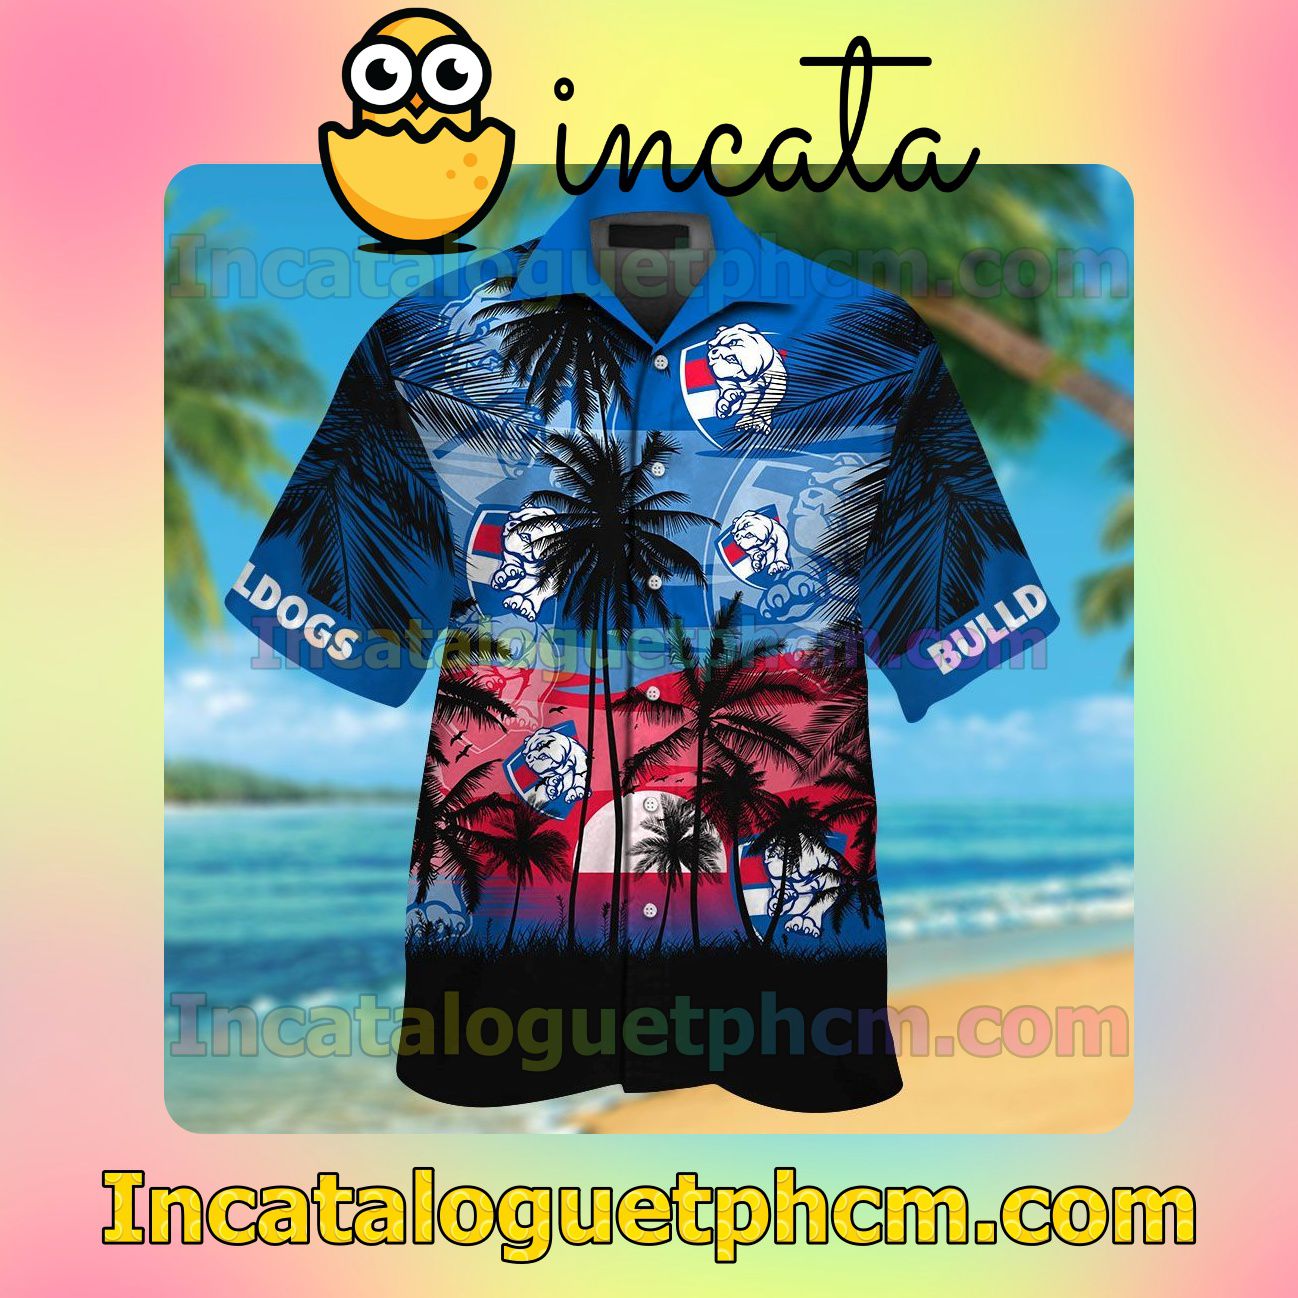 Western Bulldogs Beach Vacation Shirt, Swim Shorts